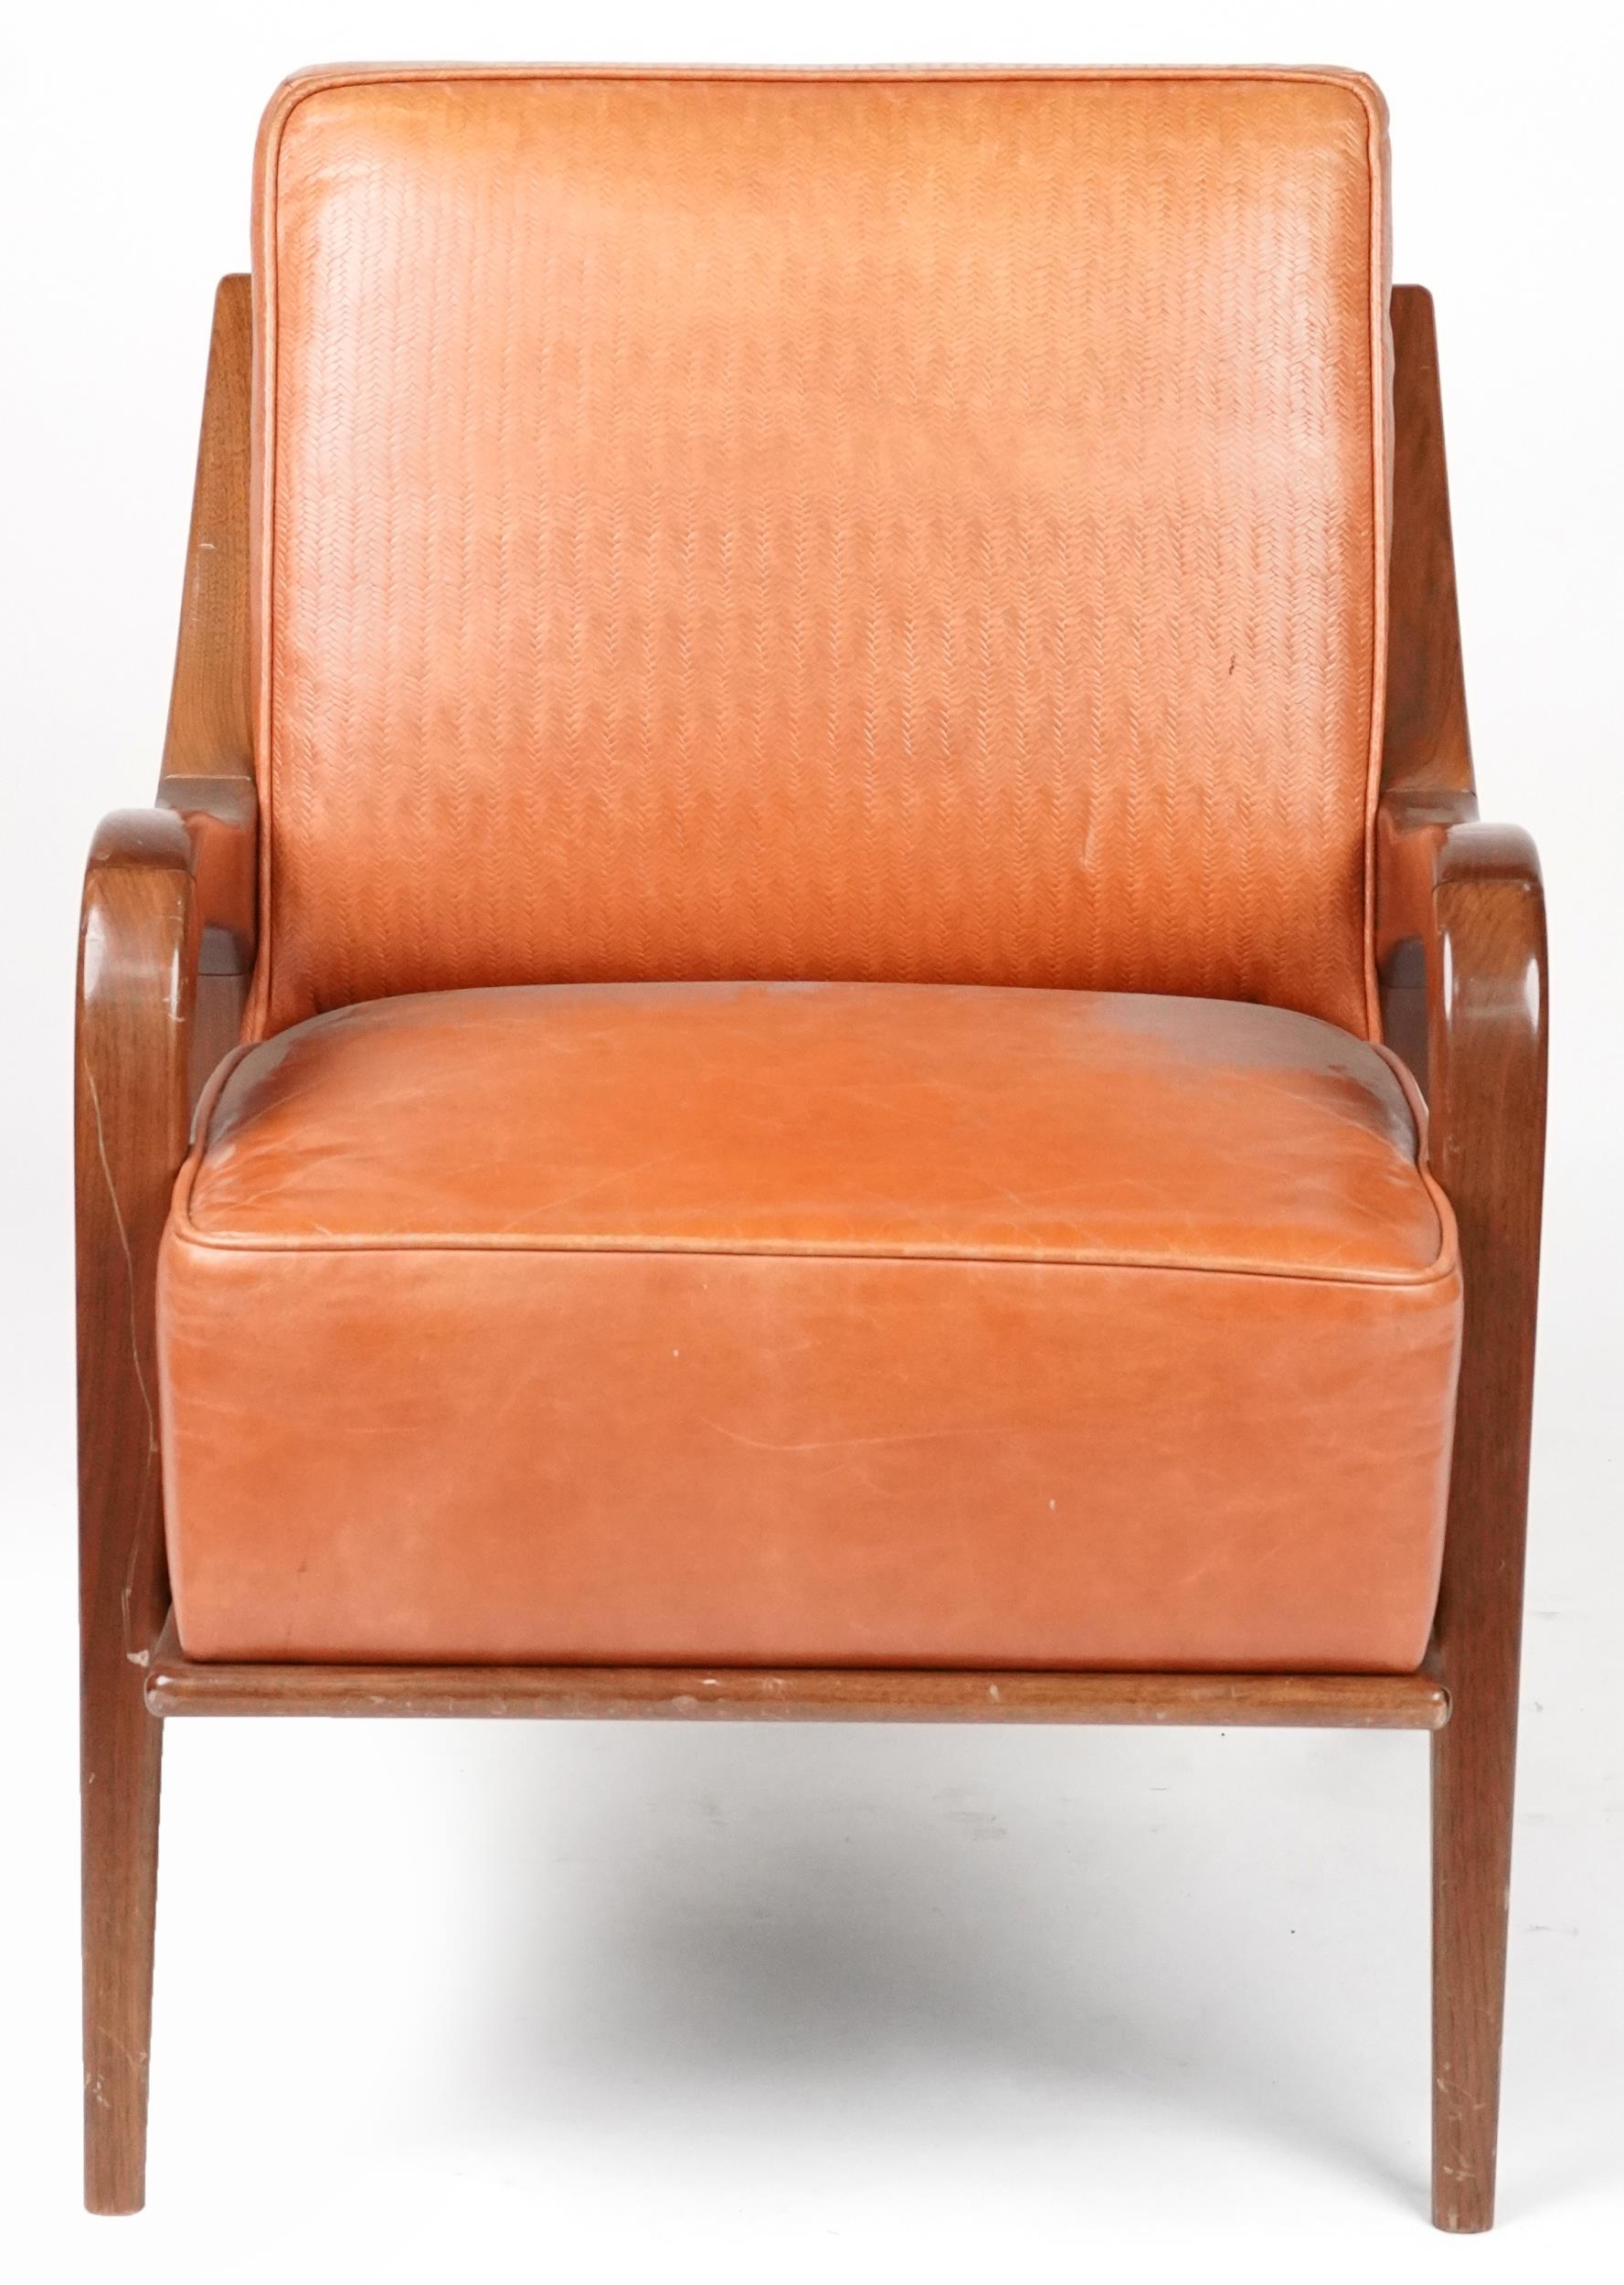 Scandinavian design hardwood lounge chair having tan upholstered back and seat, 86cm H x 62.5cm W - Image 2 of 4